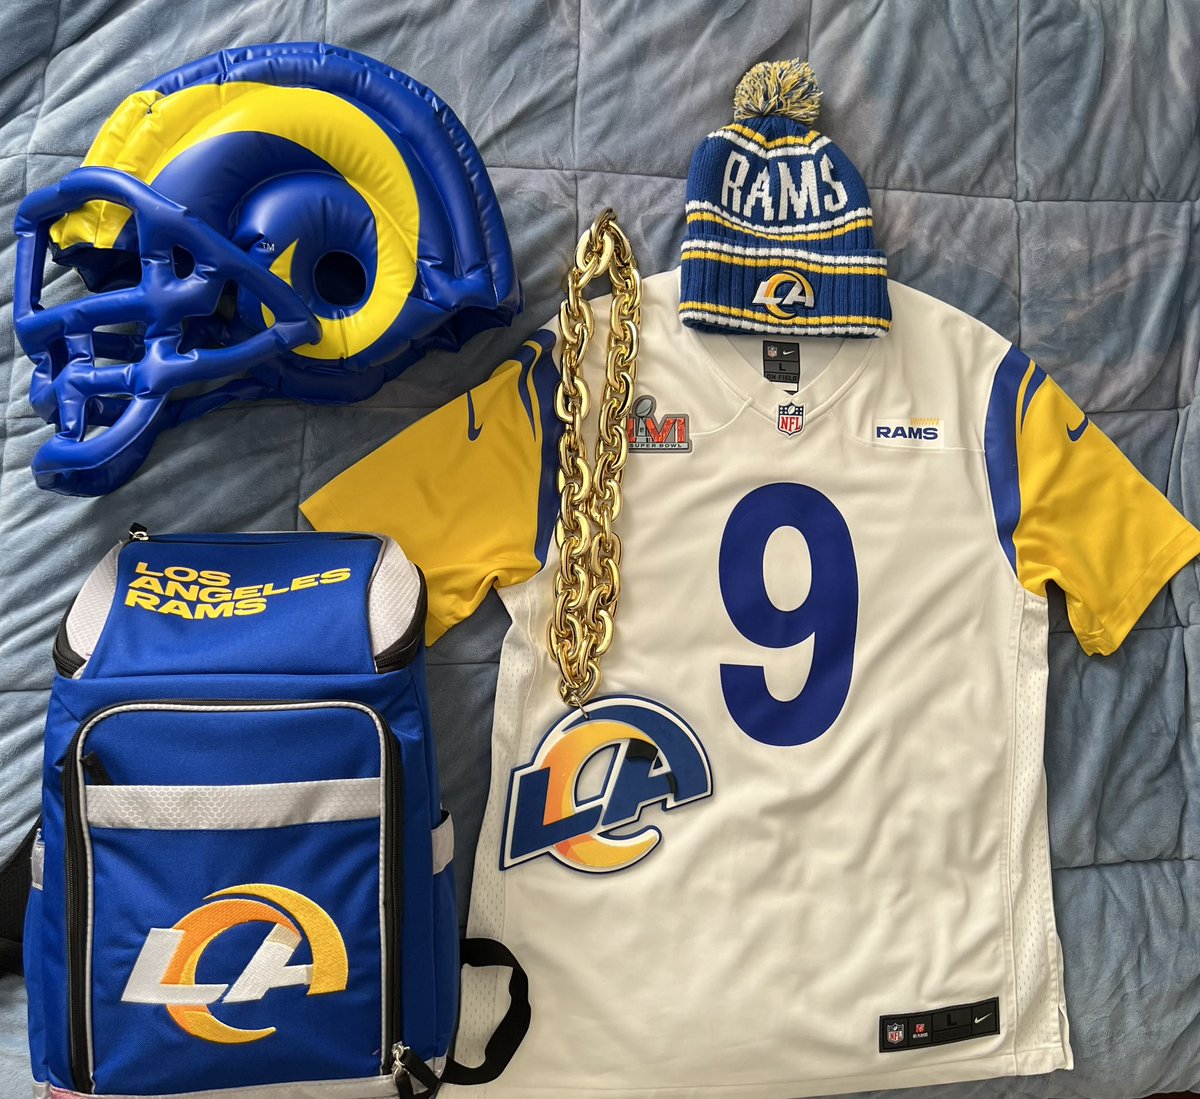 Getting Ready #Rams #Ramily 💙💛#HornsUp #MatthewStafford #RamsHouse